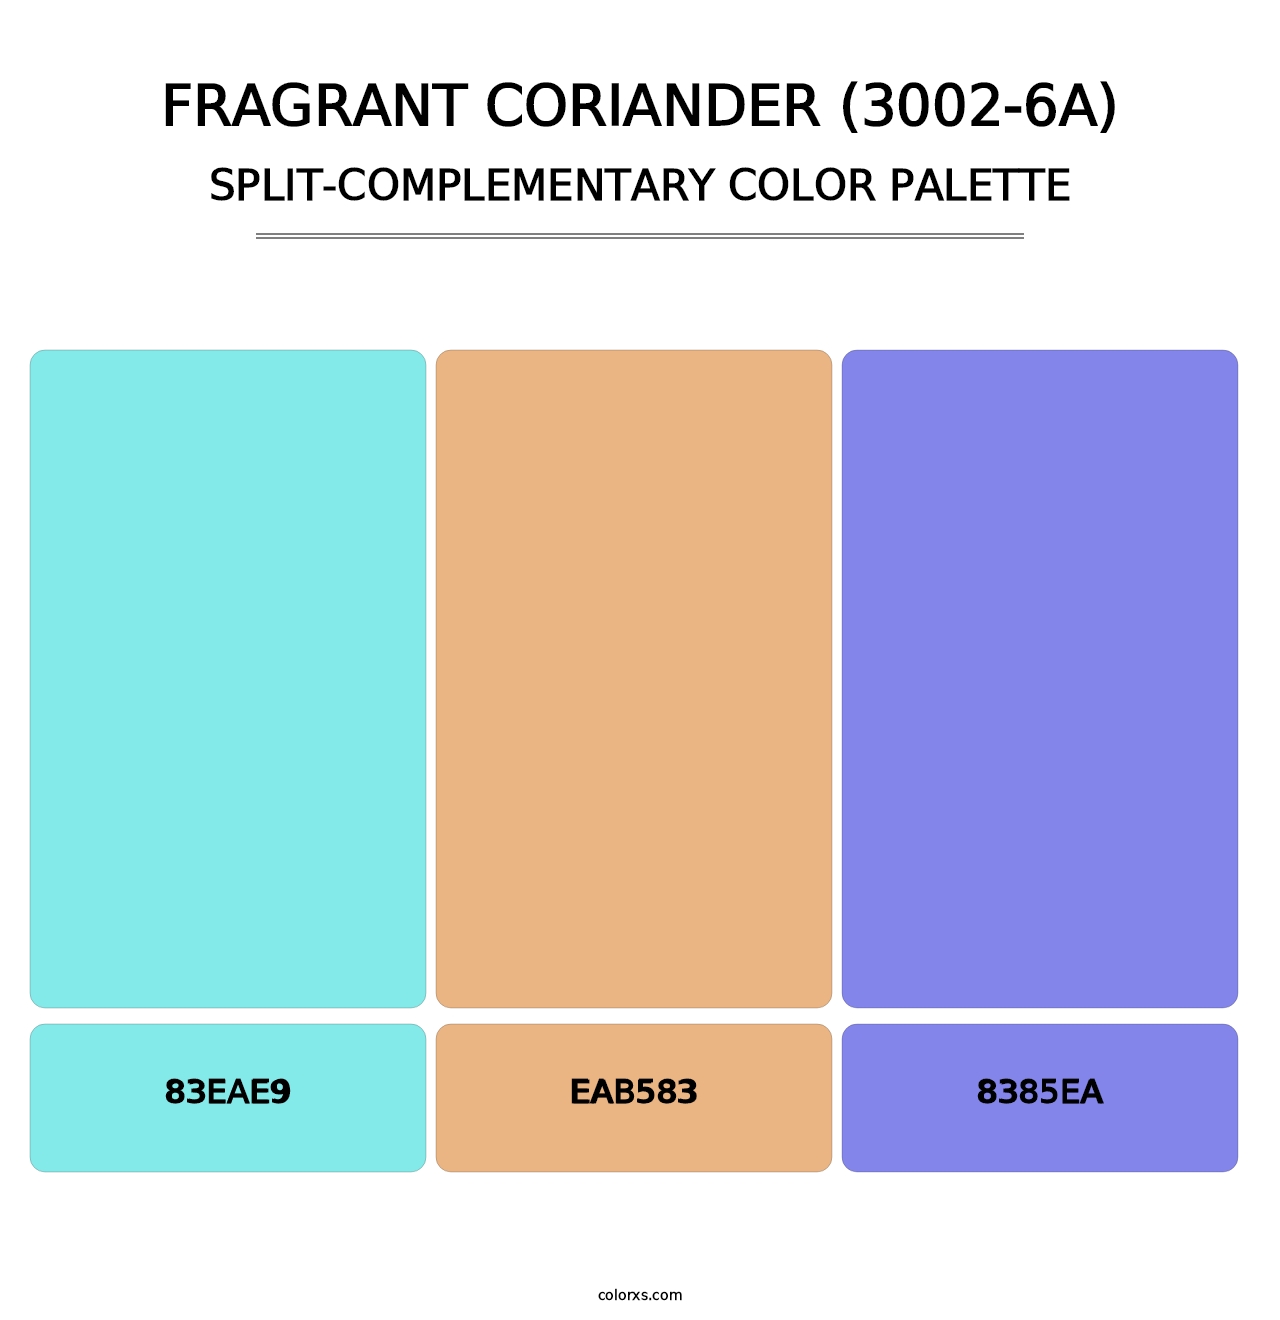 Fragrant Coriander (3002-6A) - Split-Complementary Color Palette